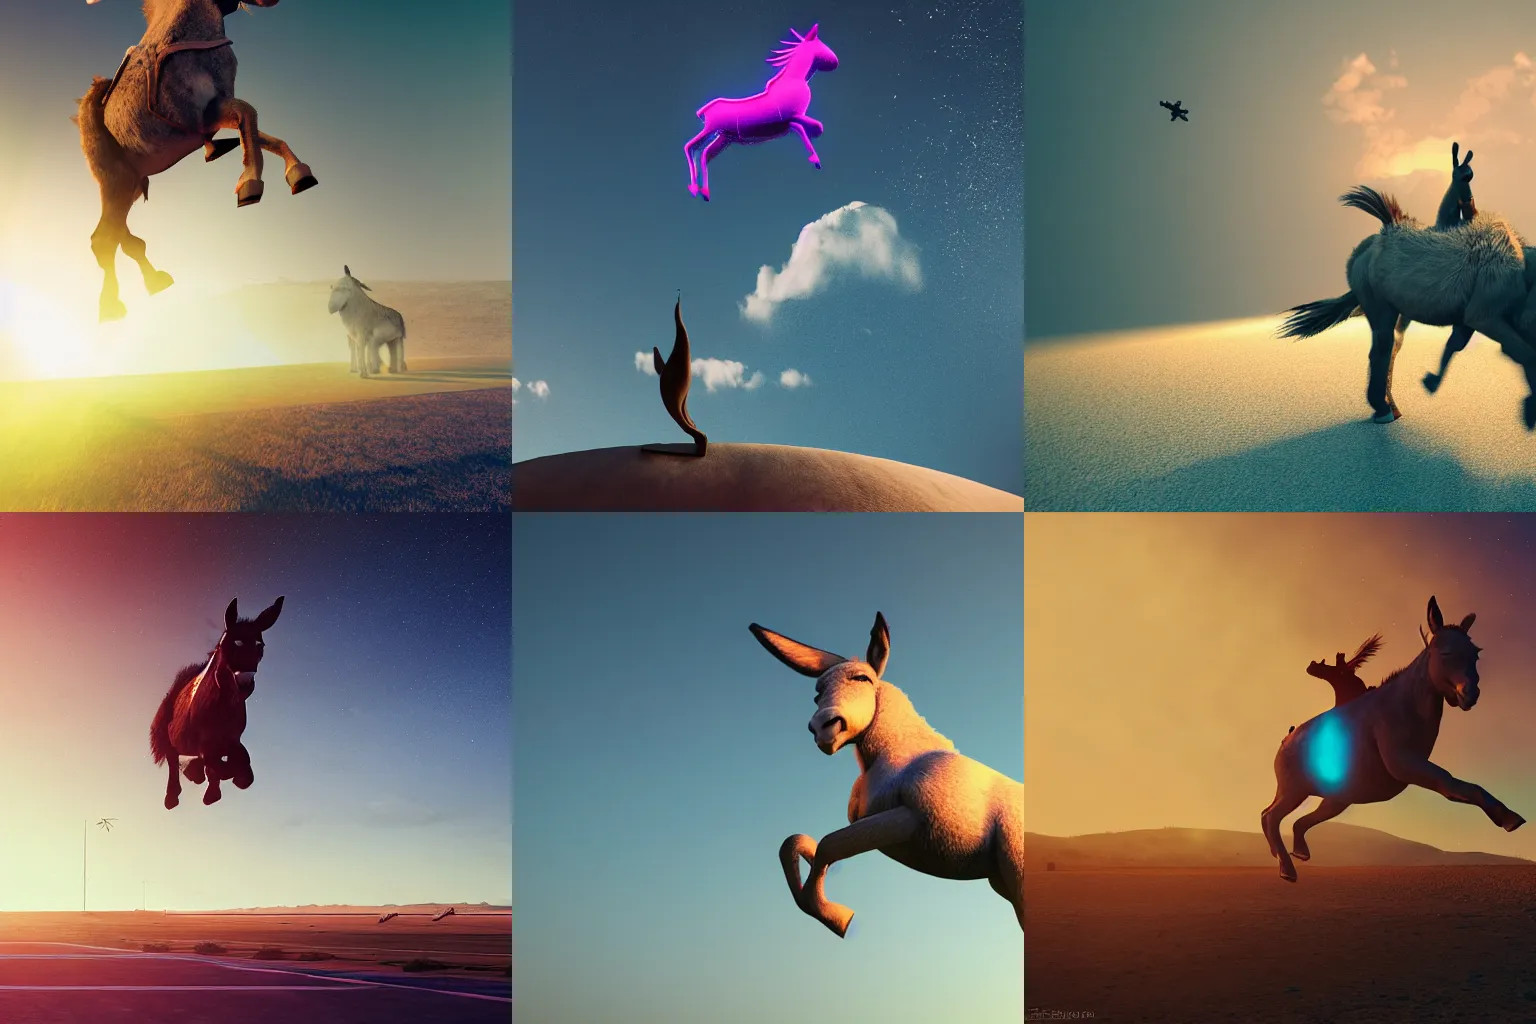 Prompt: a donkey jumping from plane, eagles in the background, artstation award winner, digital art, volumetric lighting, neon colors, short telephoto, octane render